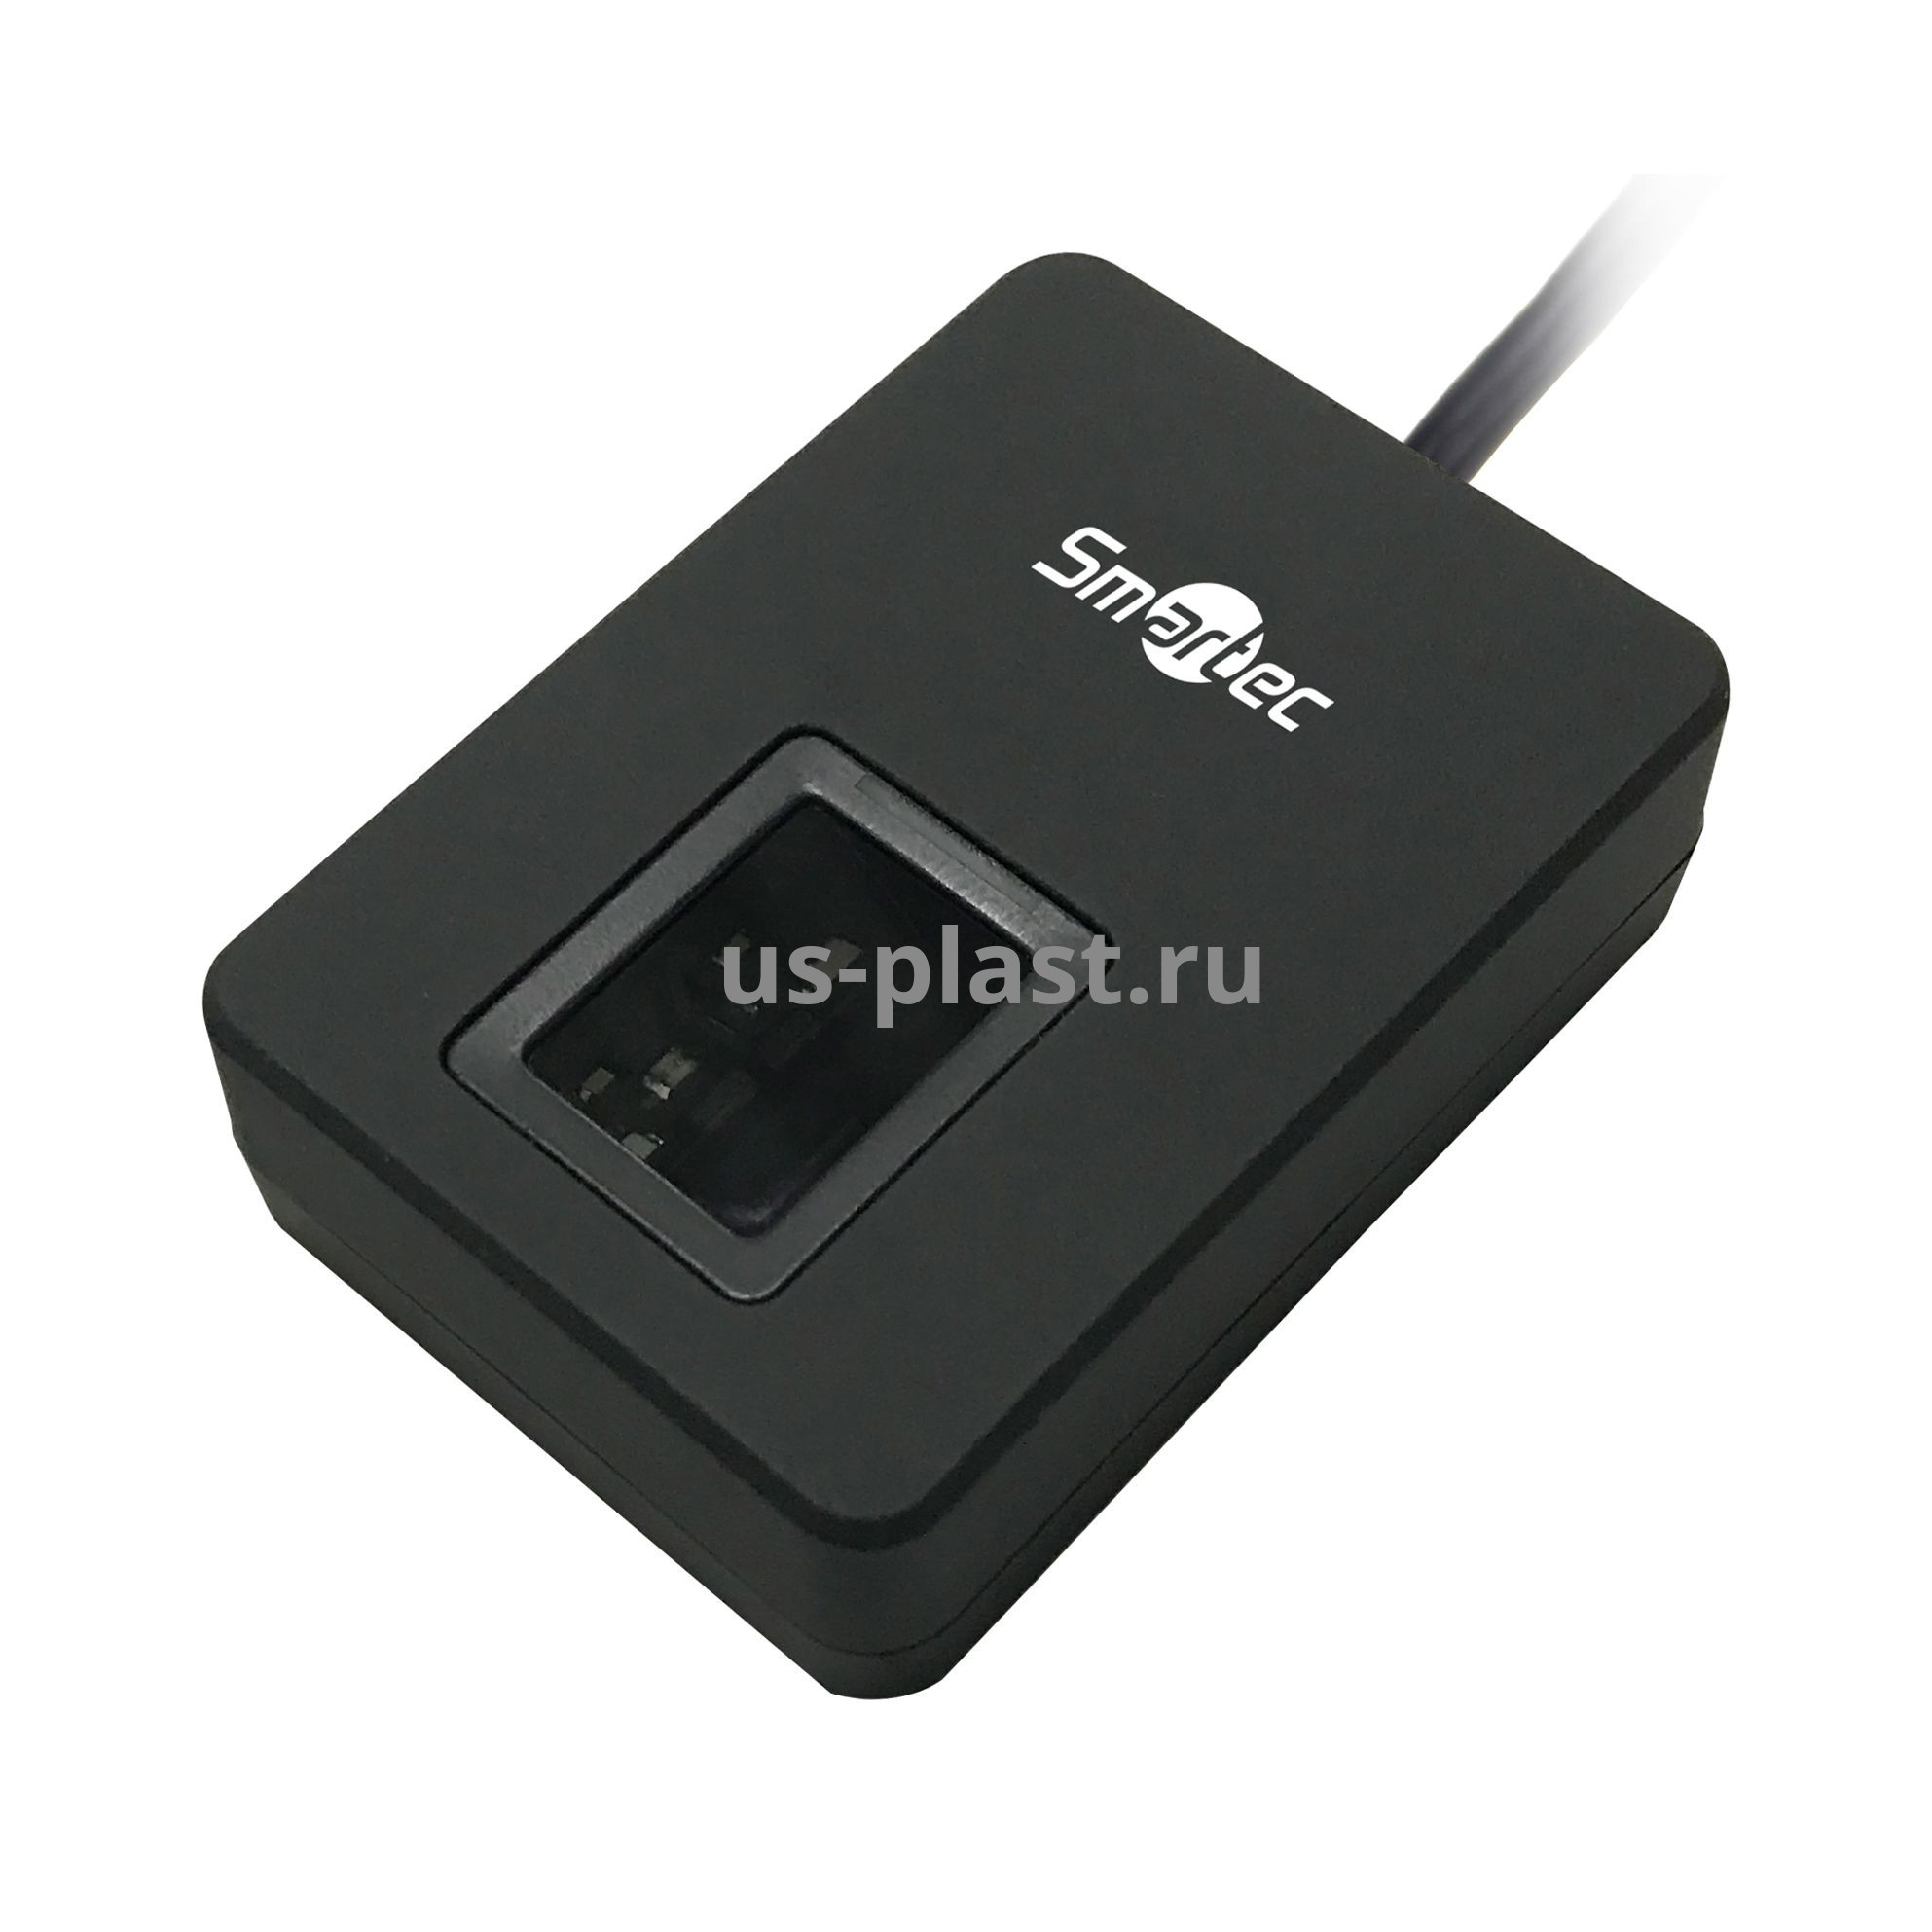 Smartec ST-FE200, биометрический USB сканер отпечатков пальцев